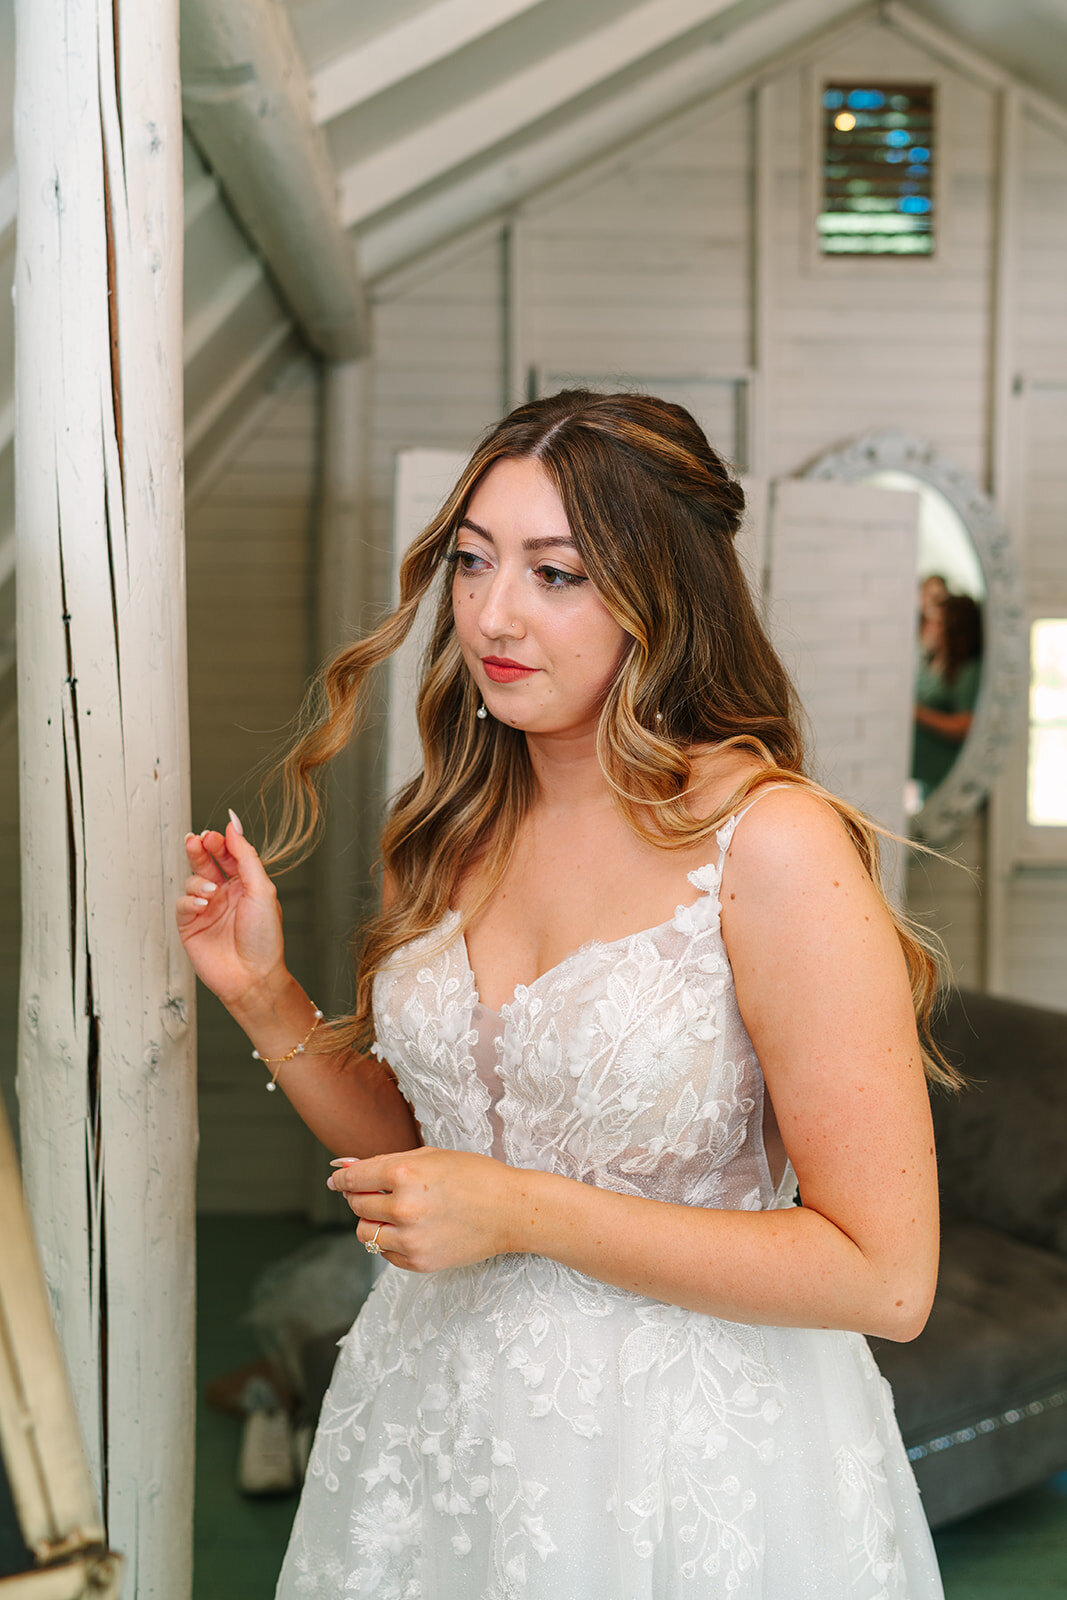 Alex Austin Jardin del Sol Wedding - Joanna Monger Photography - Snohomish indoor getting ready room